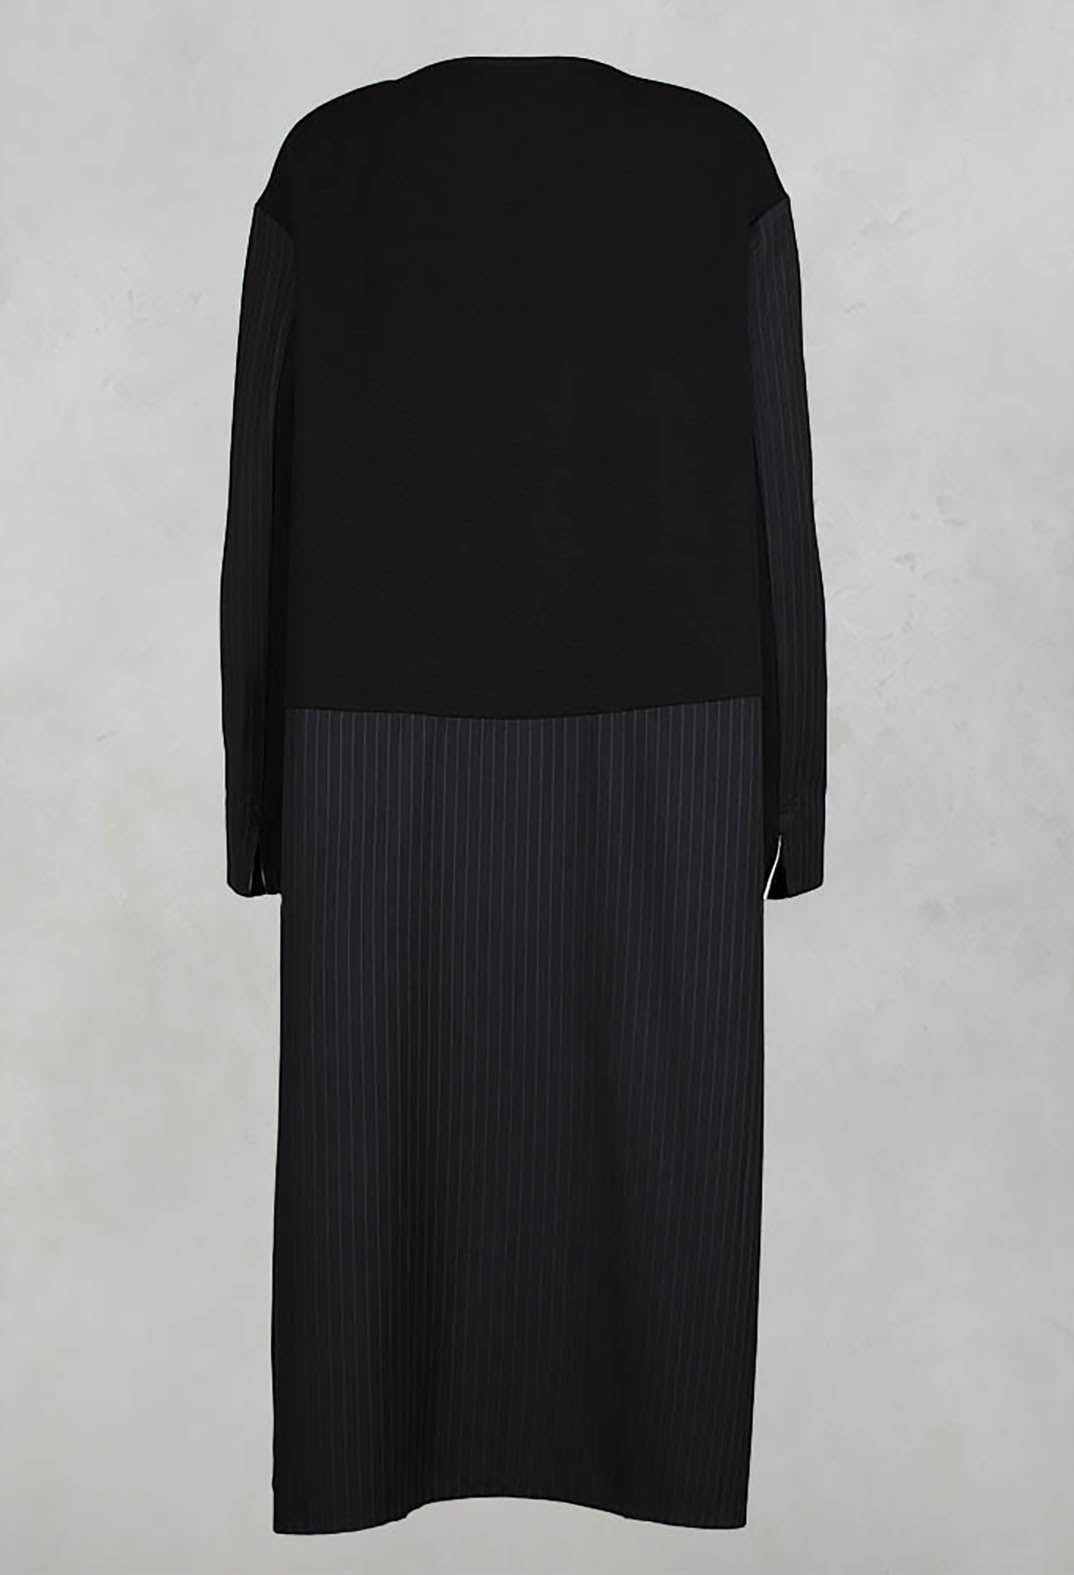 Long Sleeved Patchwork Dress in Black/Grey